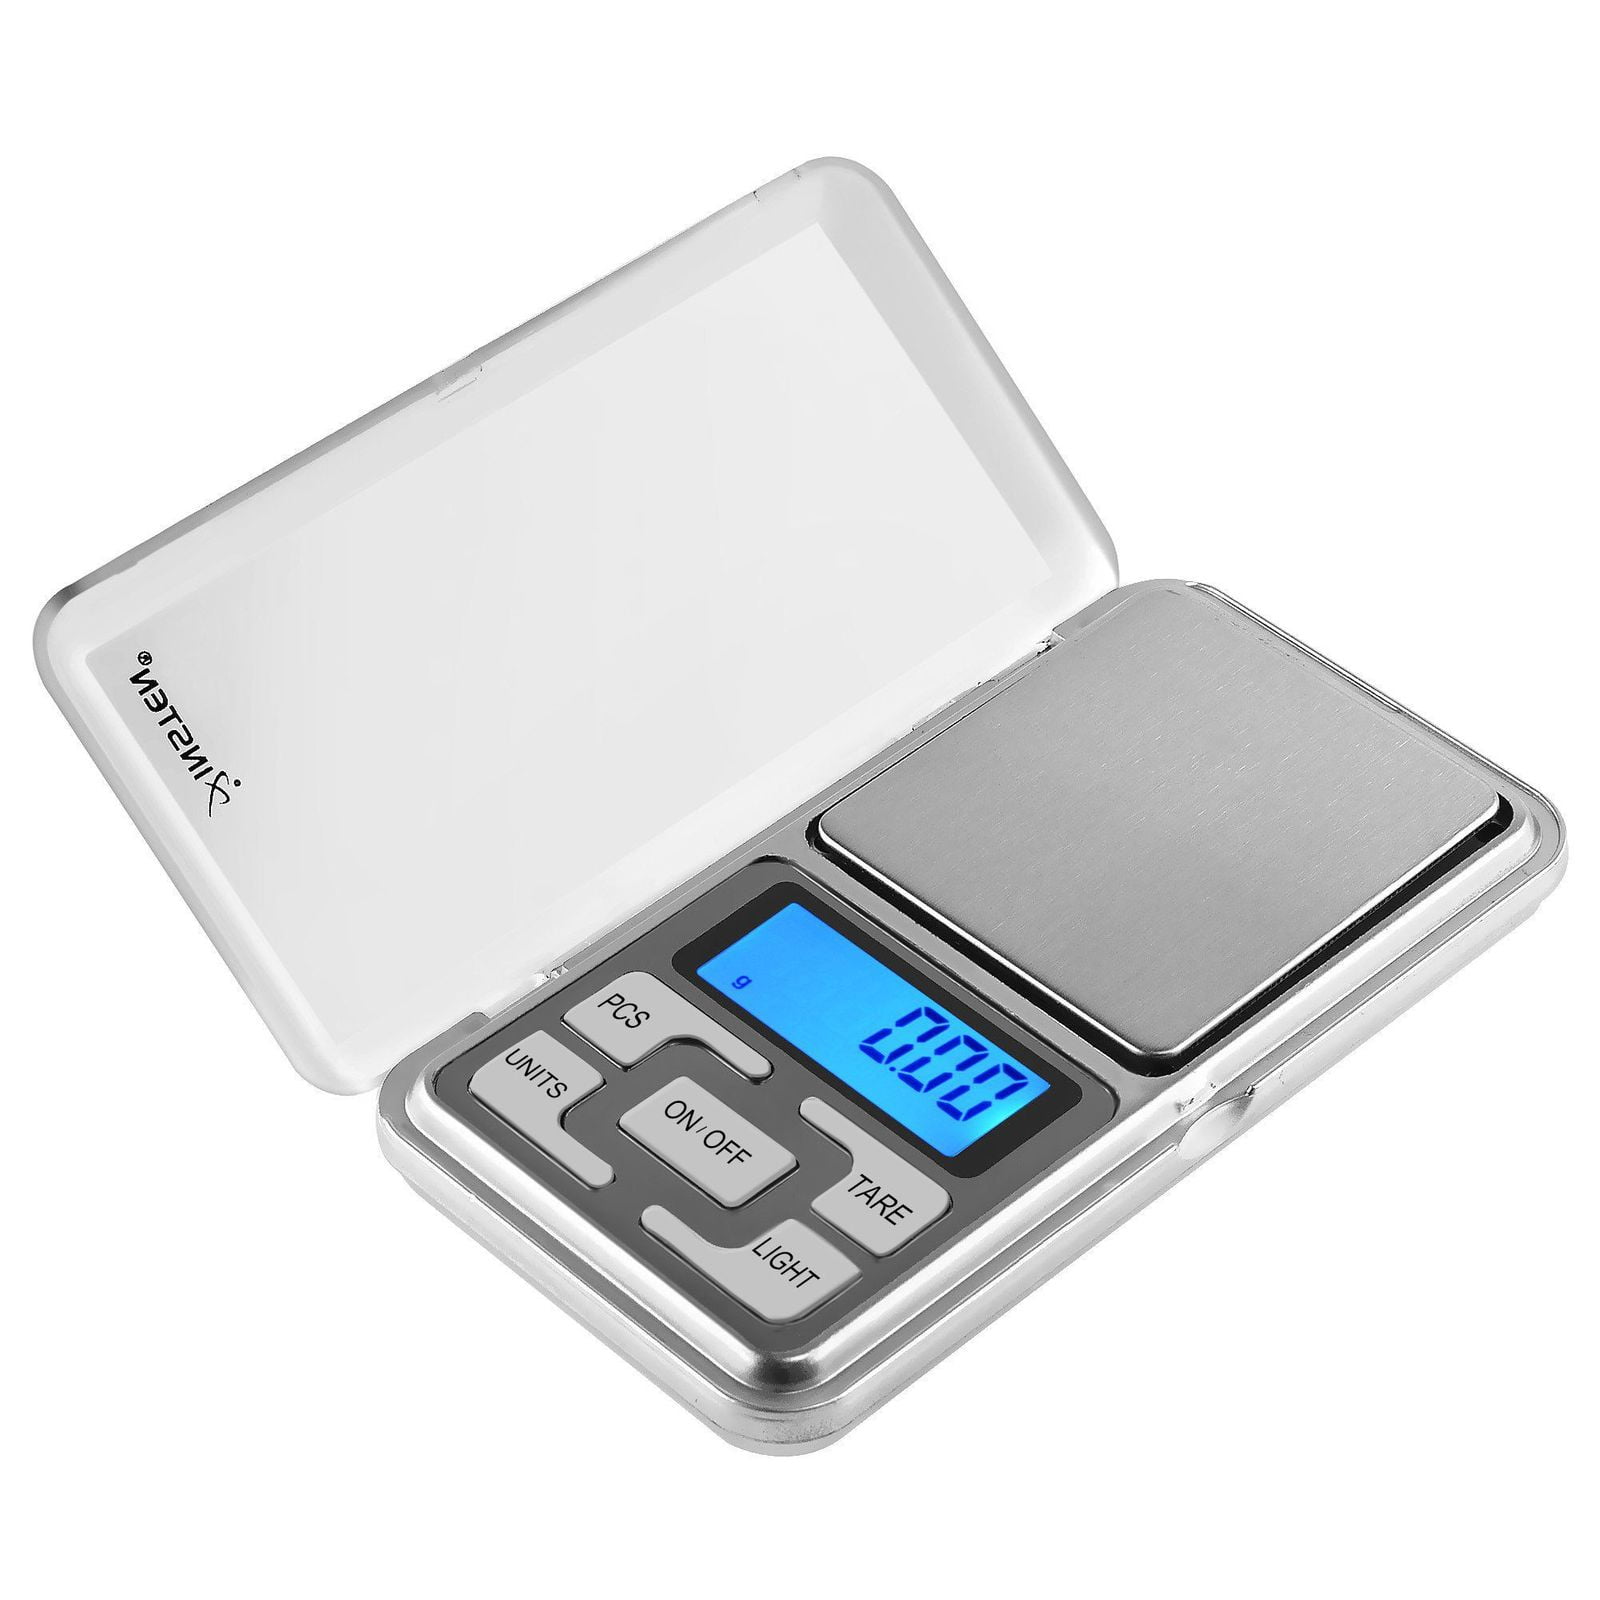 Portable 200g x 0.01g Mini Digital Scale Jewelry Pocket Balance Weight Gram LCD 